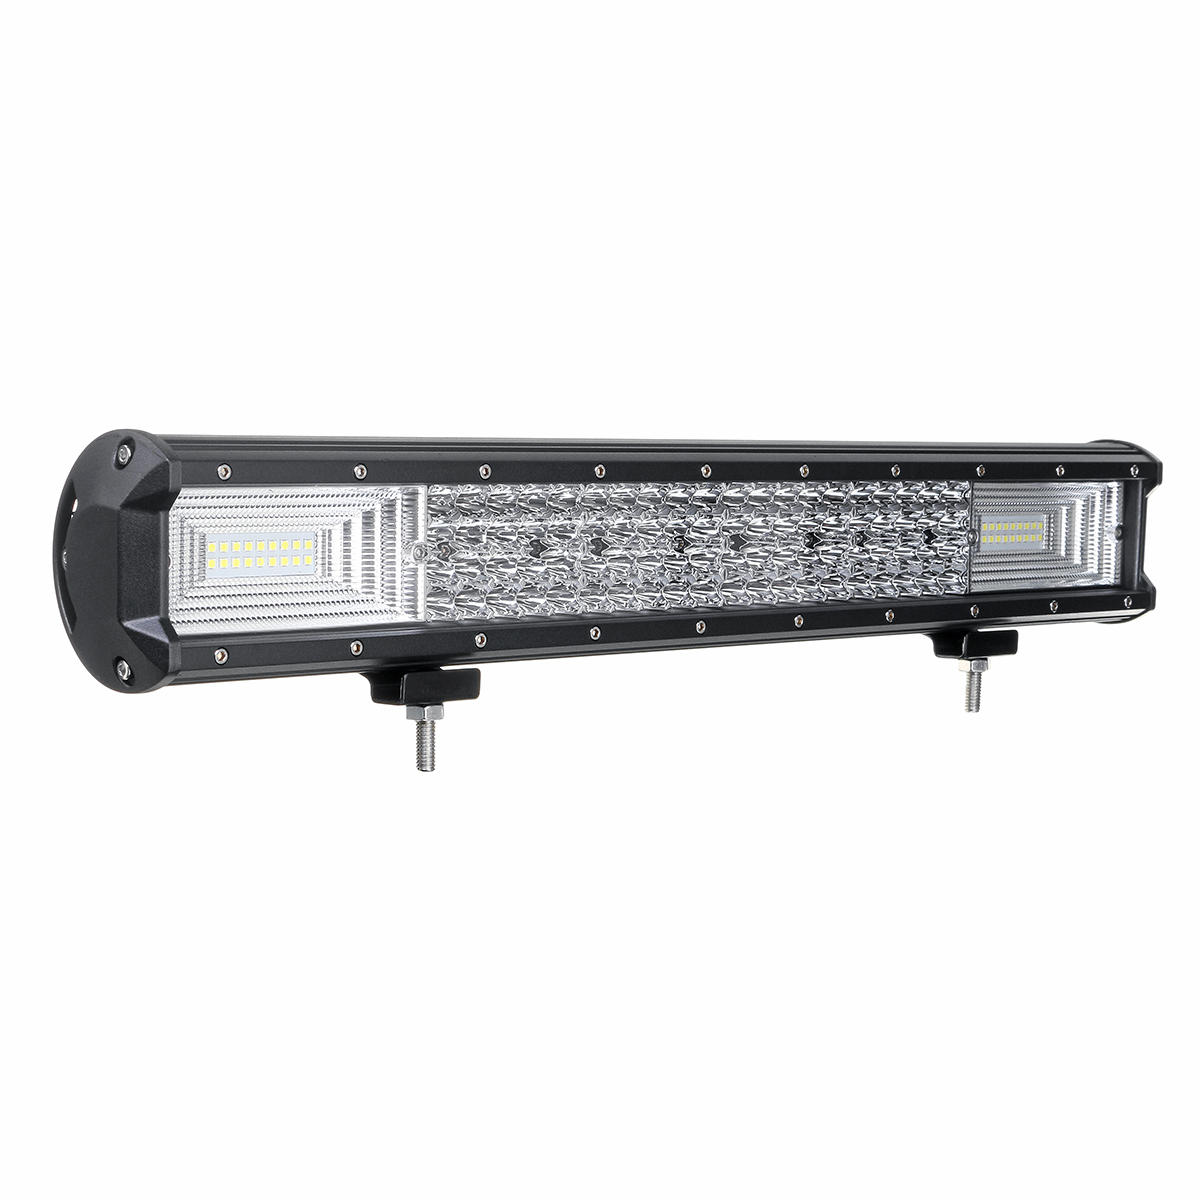 

20'' Inch Quad-row LED Work Light Bar Combo Offroad Driving Lamp Car Truck Boat 116Led DC10-30V 1160W Waterproof